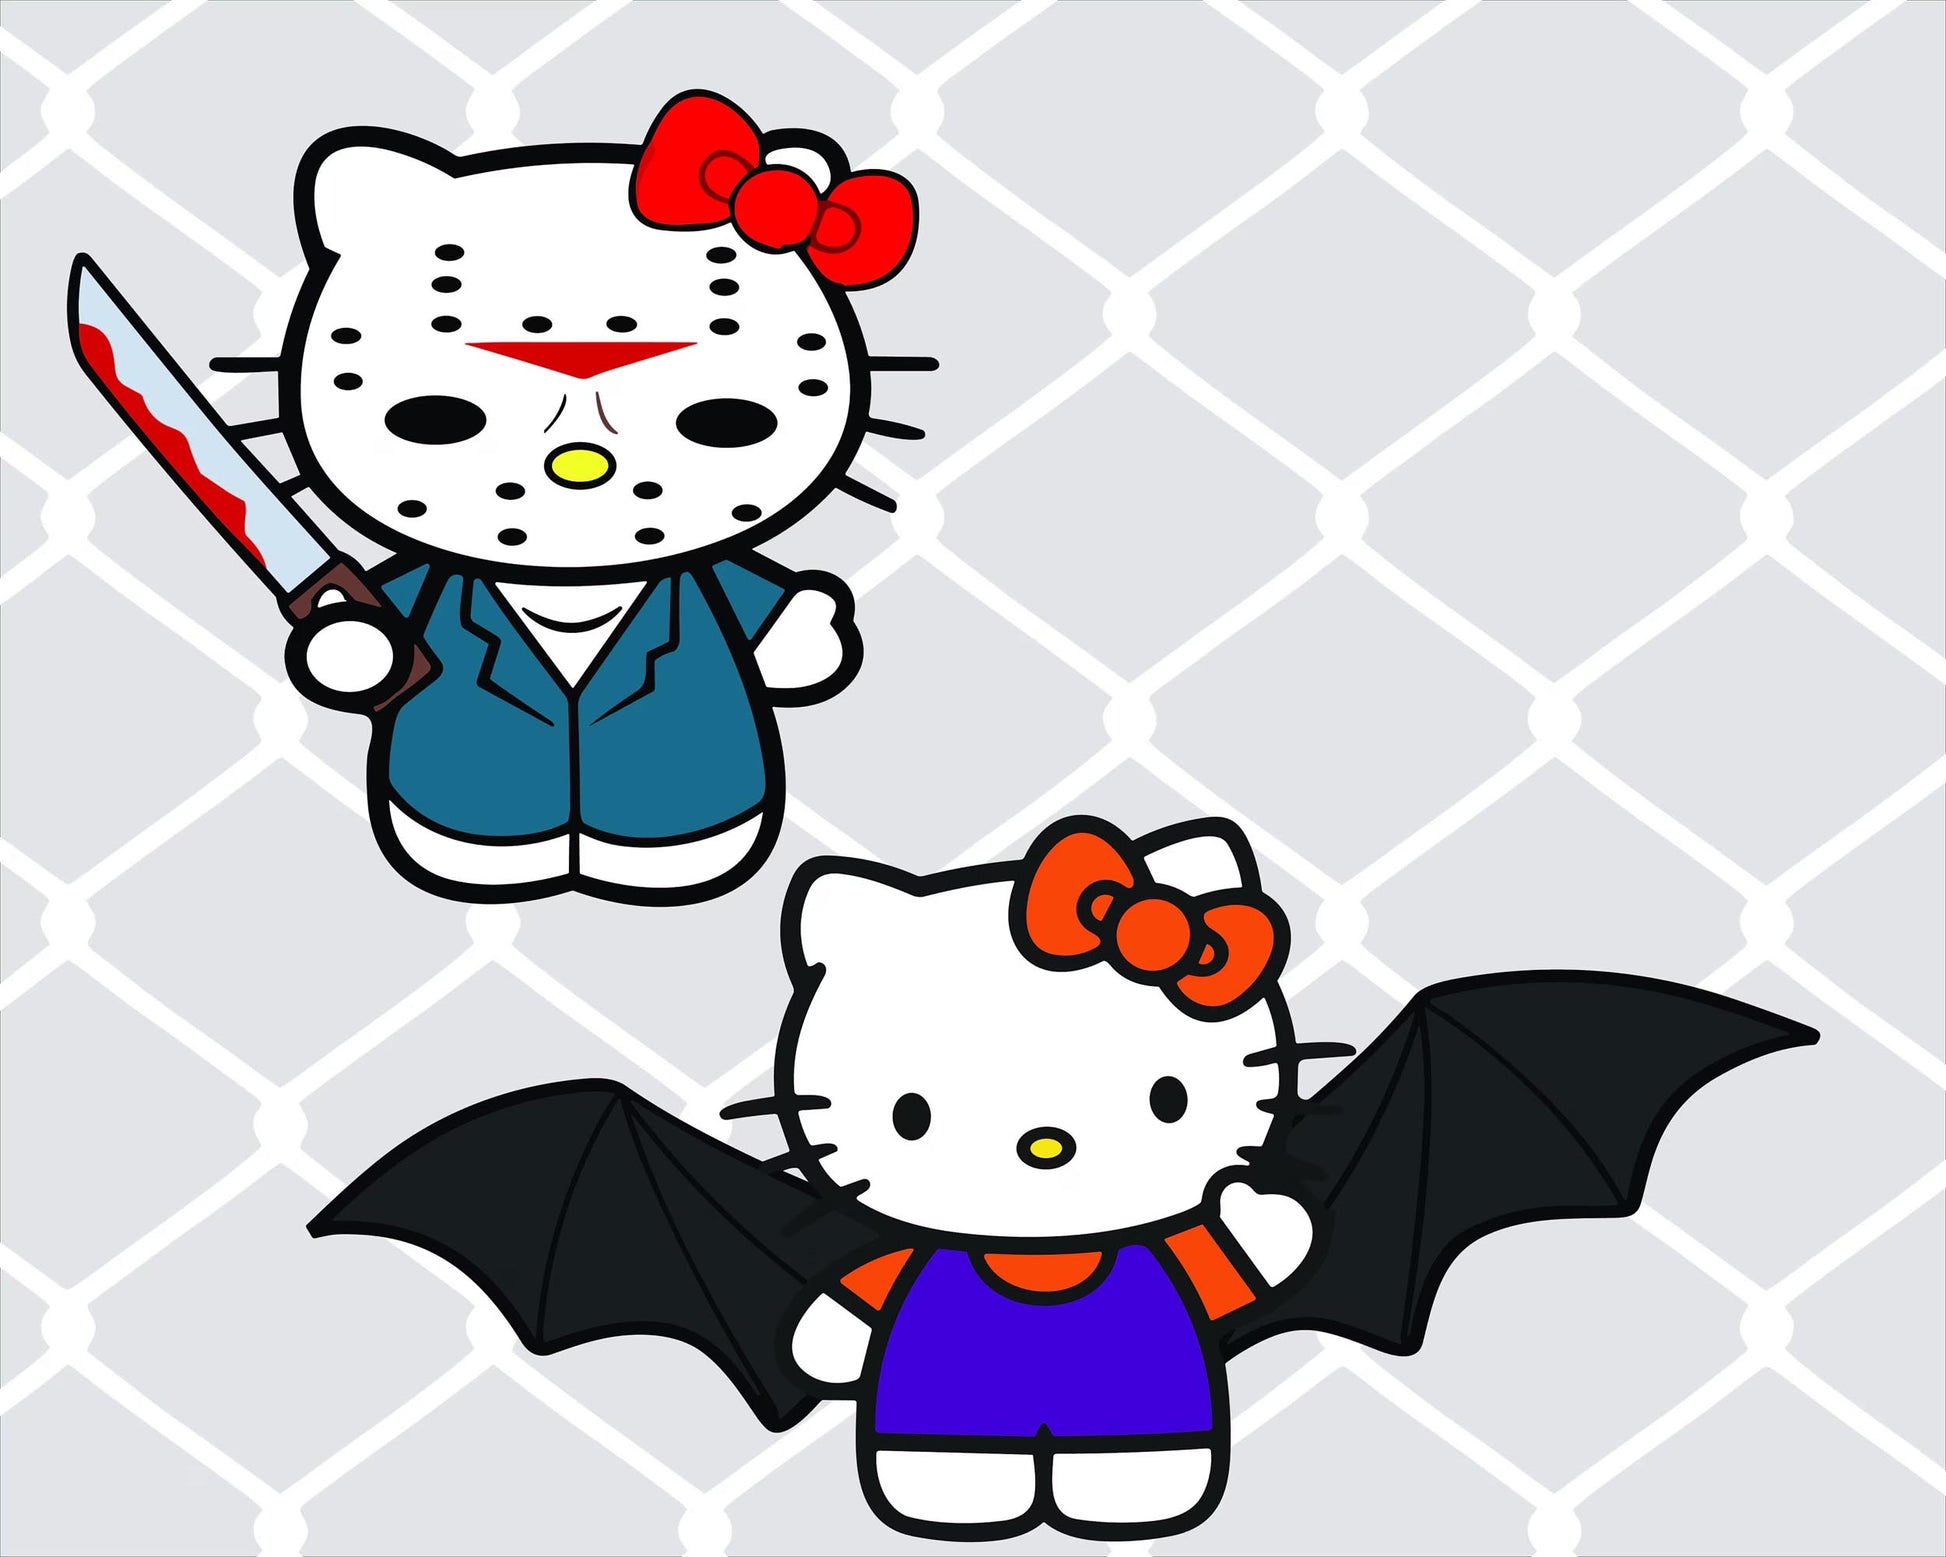 New 150+ Valentine Hello Kitty Bundle, Valentine kawaii kitty SVG png